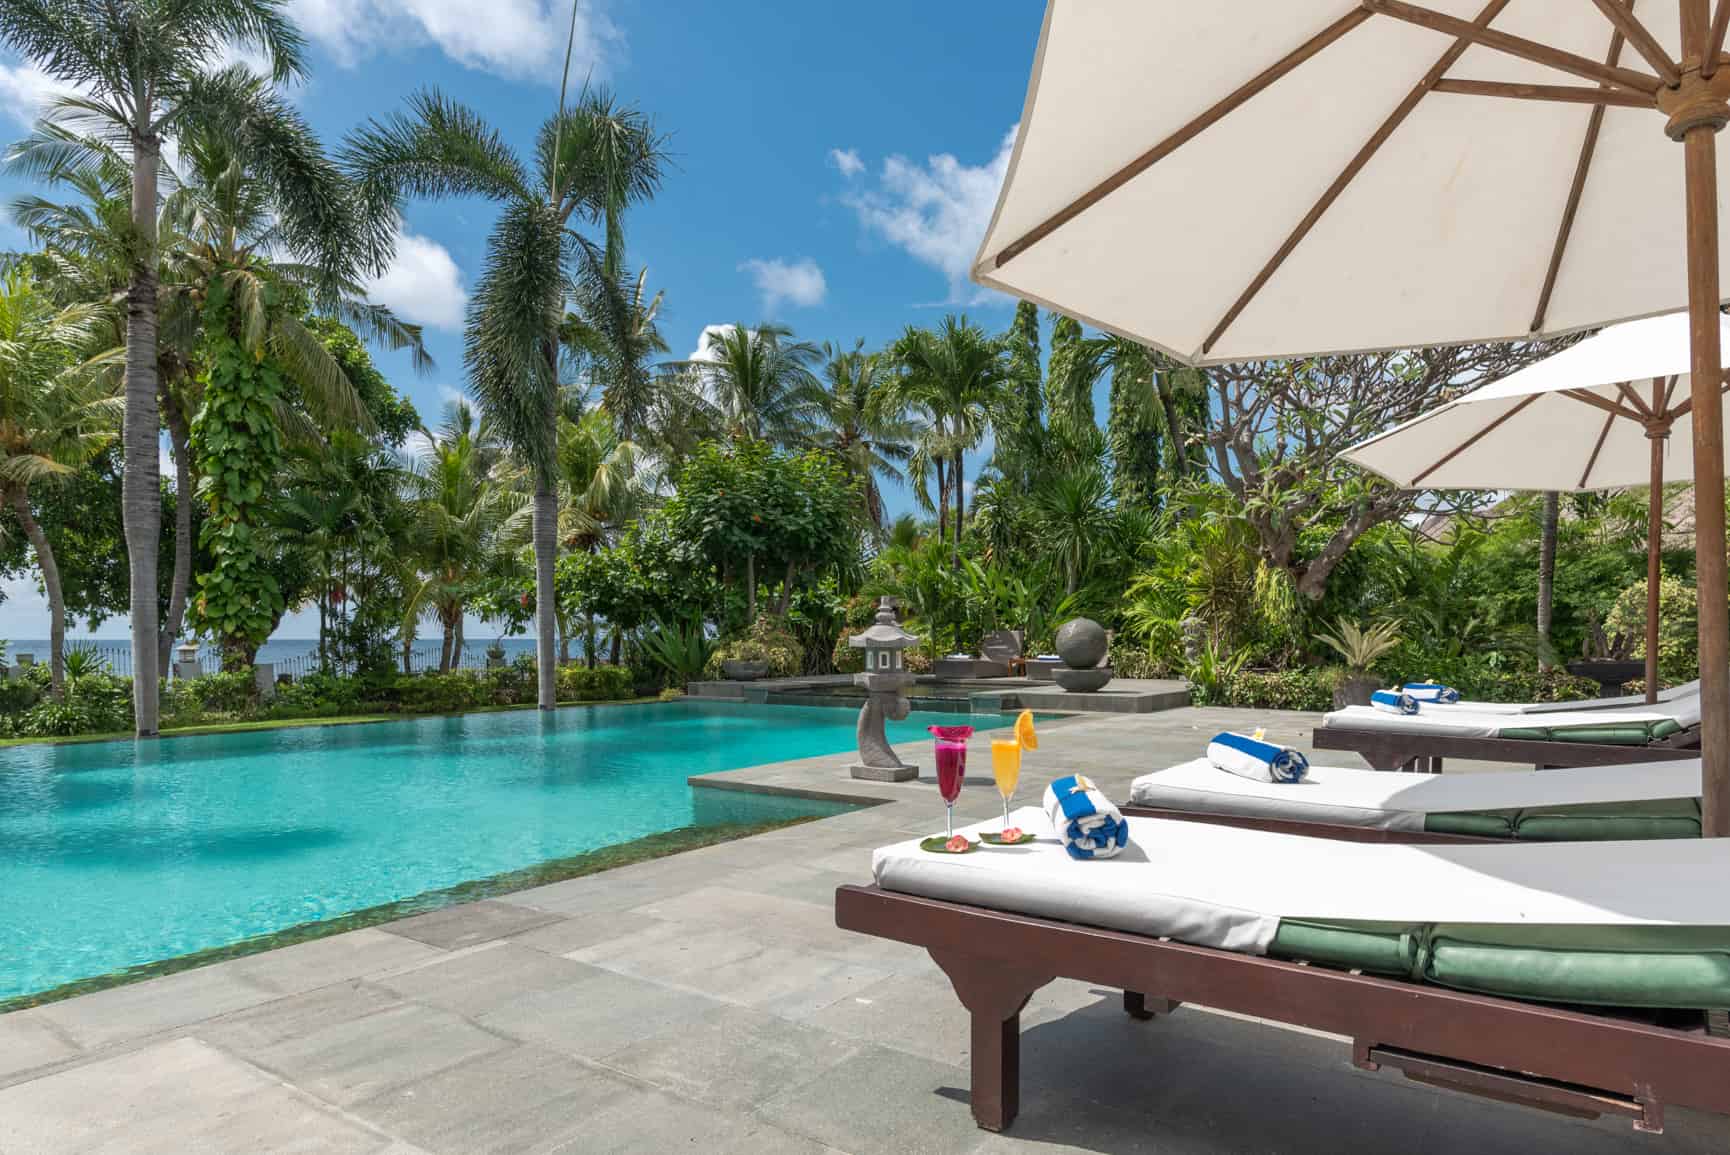 Villa Segara Murti, Bali - Stylish Beachfront Villa! - Bali Vacation Homes